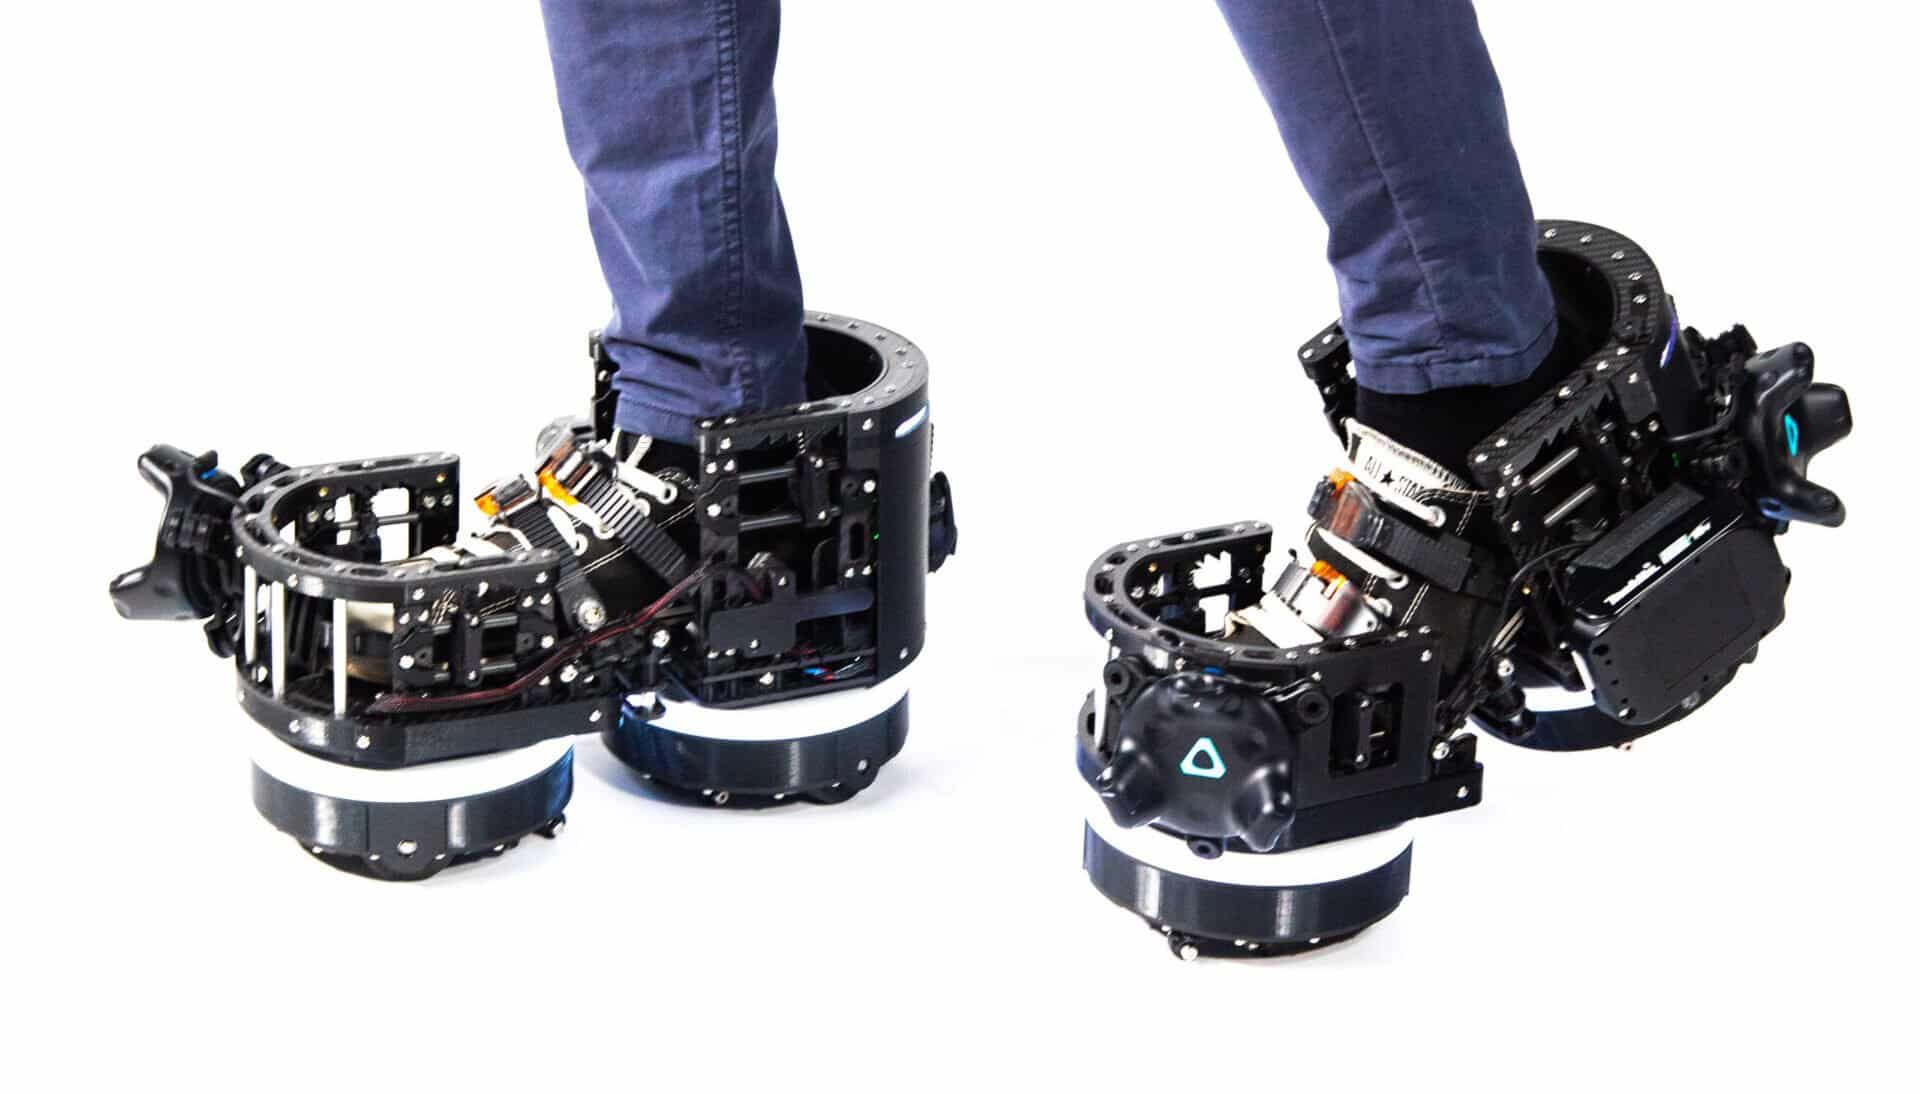 Ekto VR Robotics Boots 09 2 1920x2027 1 e1601208333226